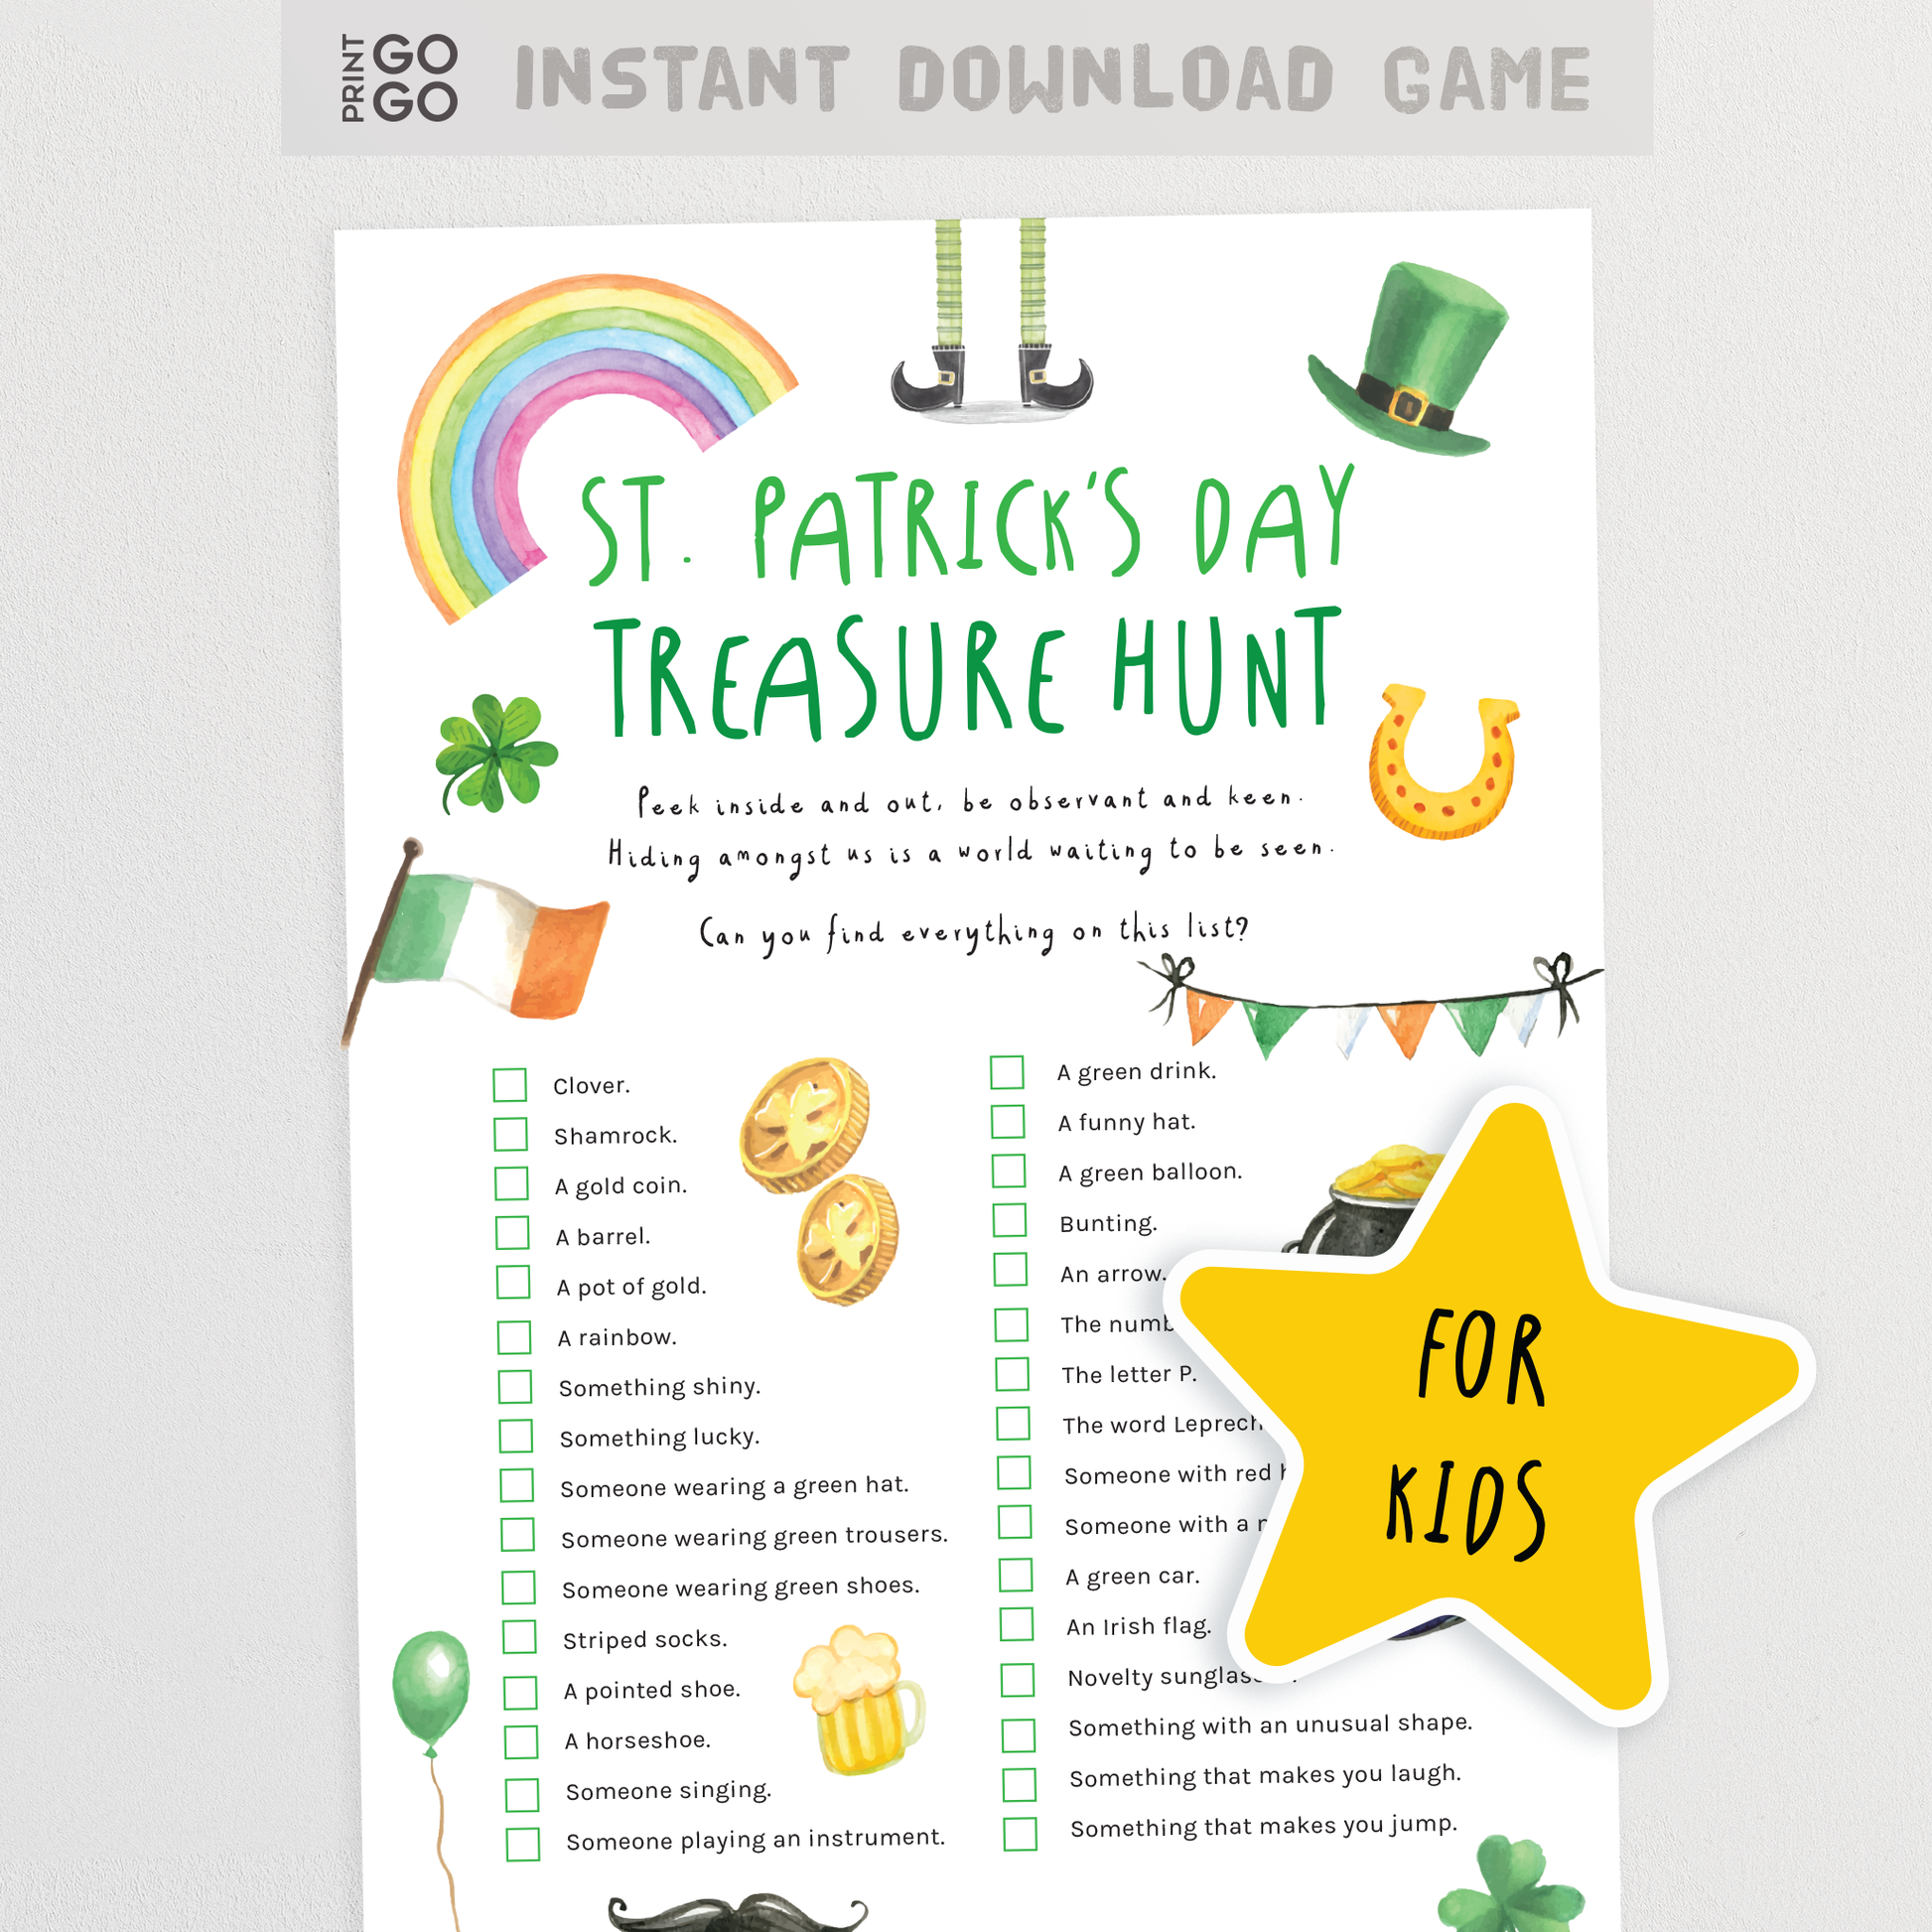 St. Patrick's Day Treasure Hunt for Kids